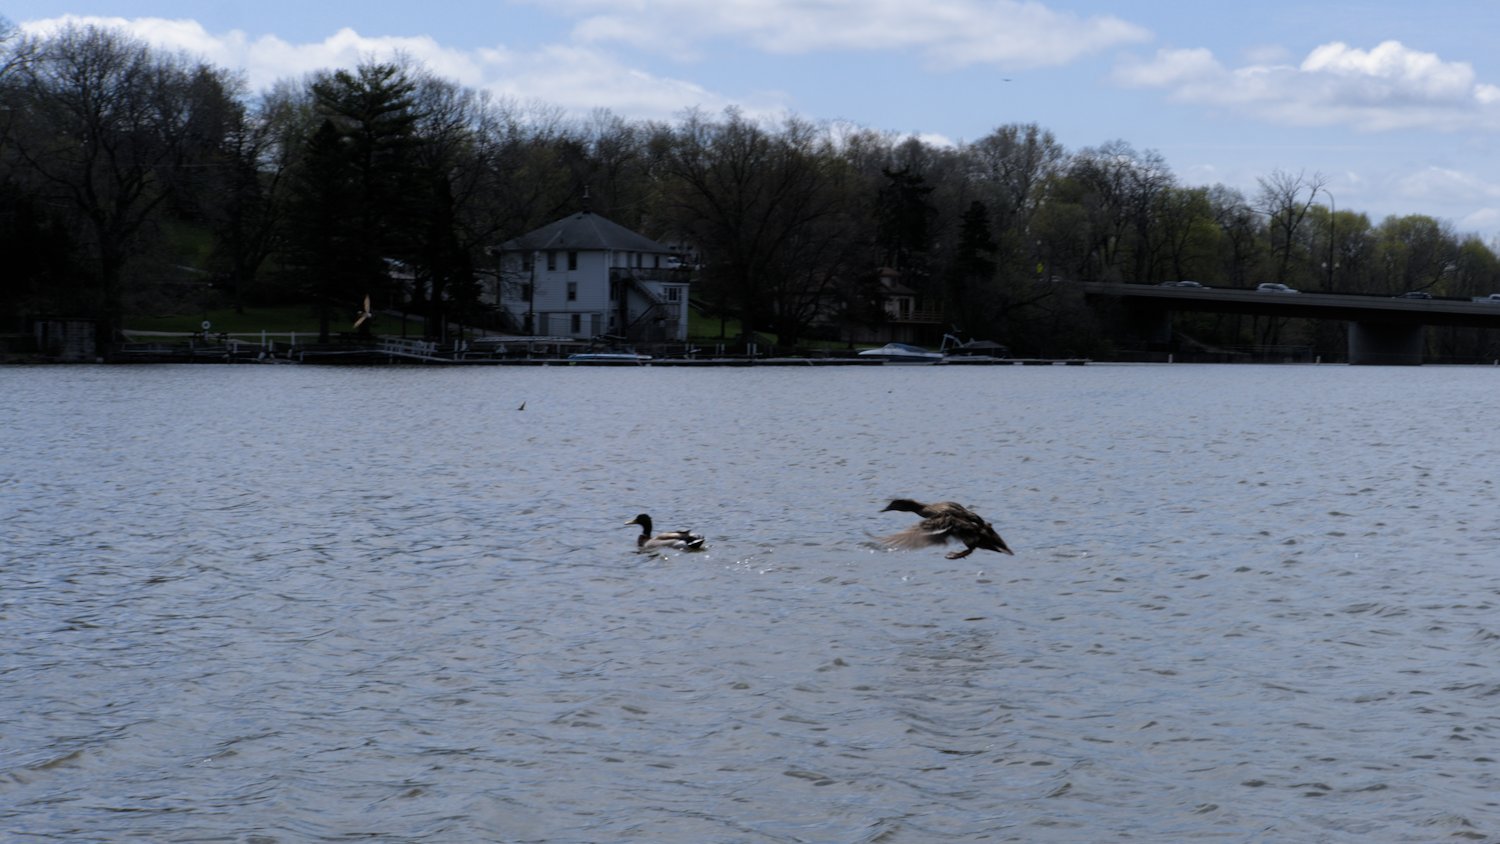 Mallard ducks in flight and in the river.